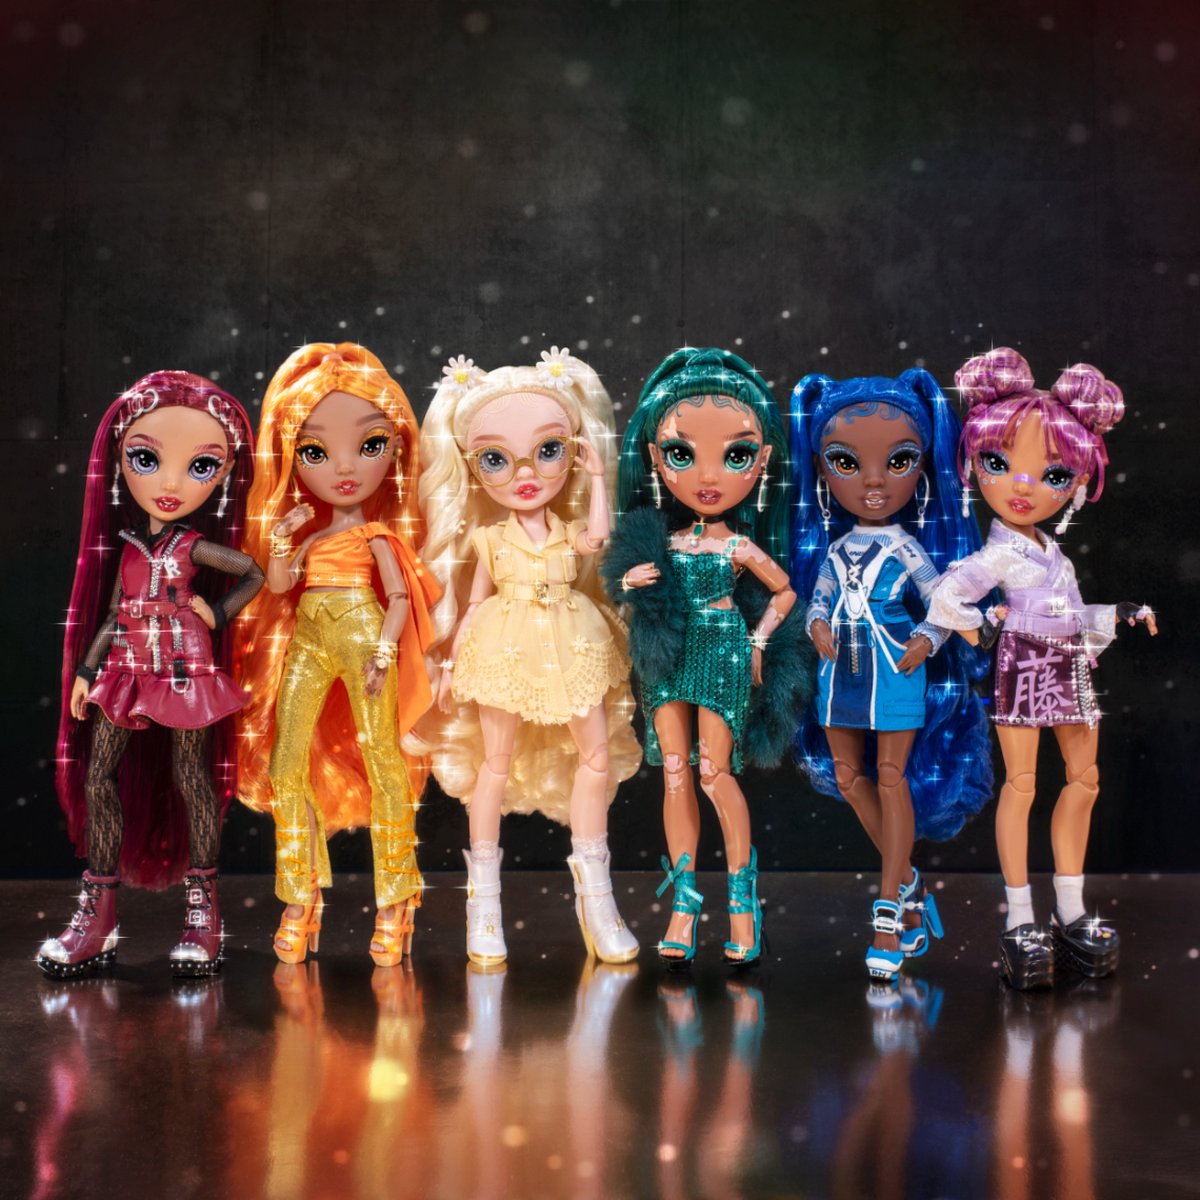 MGA Rainbow High CORE Fashion Doll CO S4